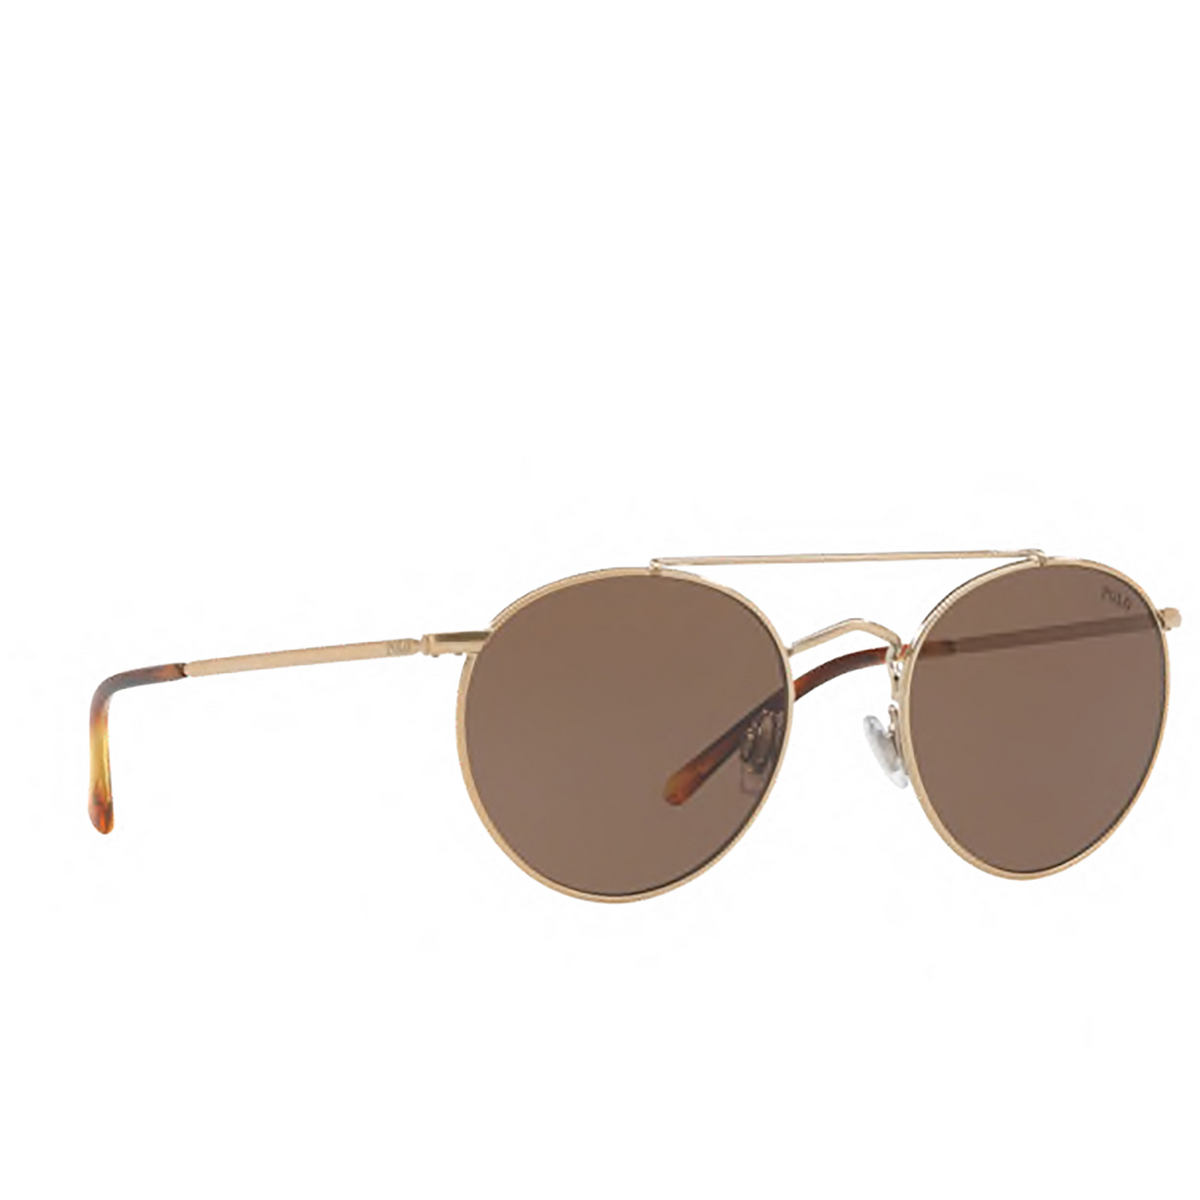 Polo Ralph Lauren® Round Sunglasses: PH3114 color 9334/73 - three-quarters view.